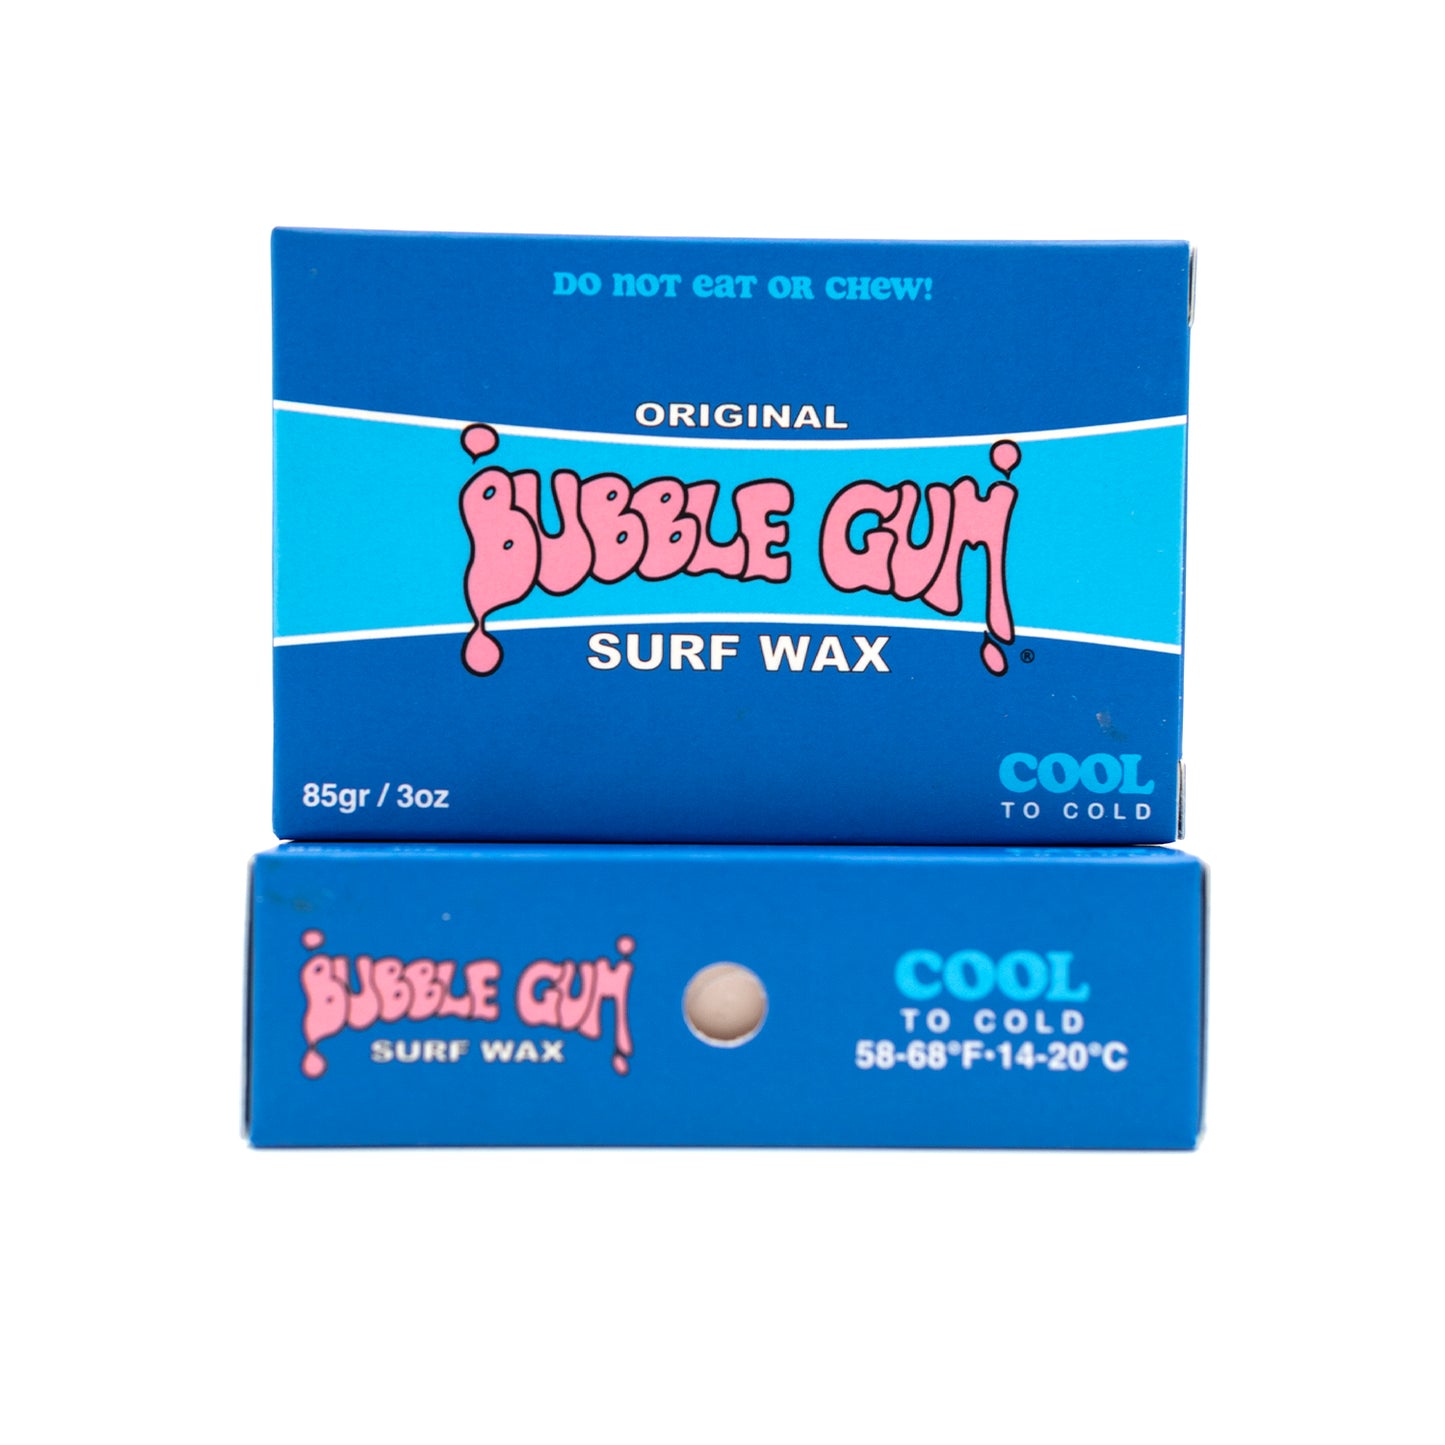 Bubble Gum "Original Formula" Surf Wax Box - Cool to Cold - 58°- 68° - 6 Pack